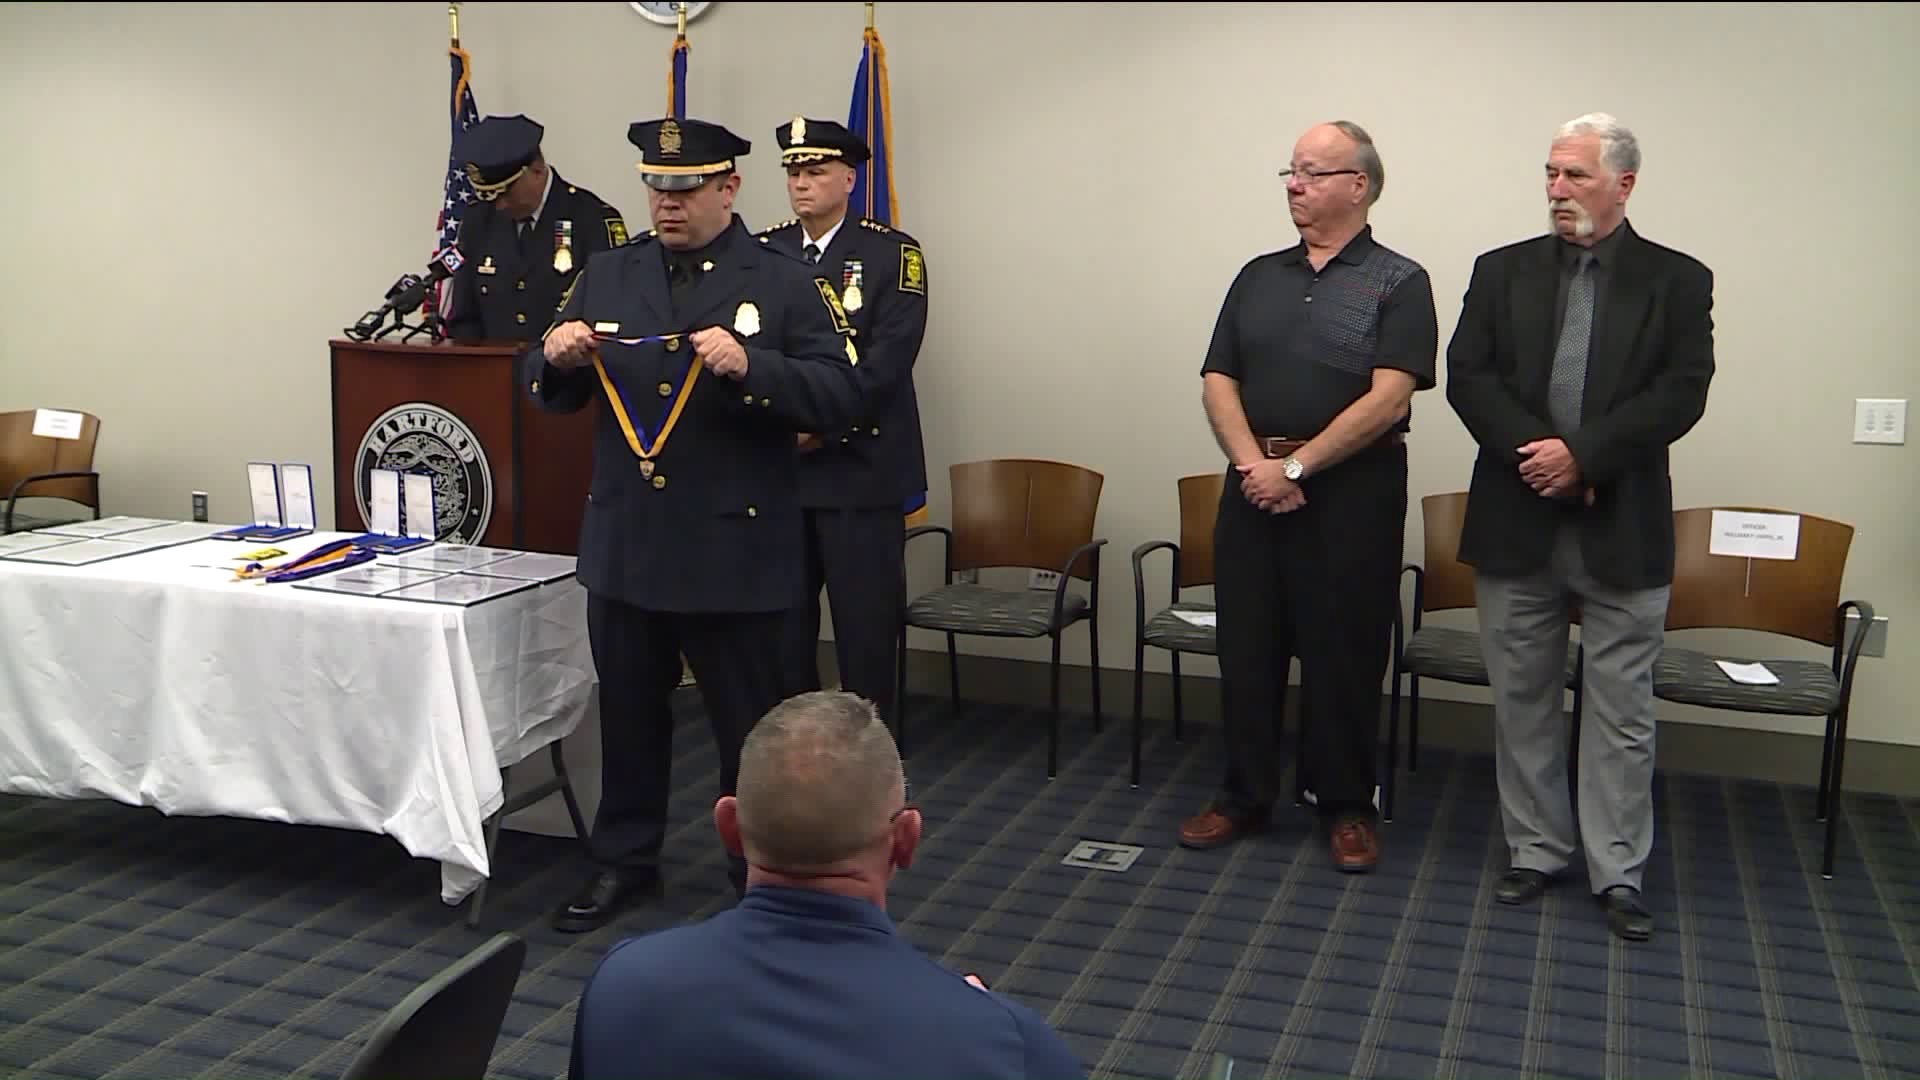 Former Hartford police officers honored